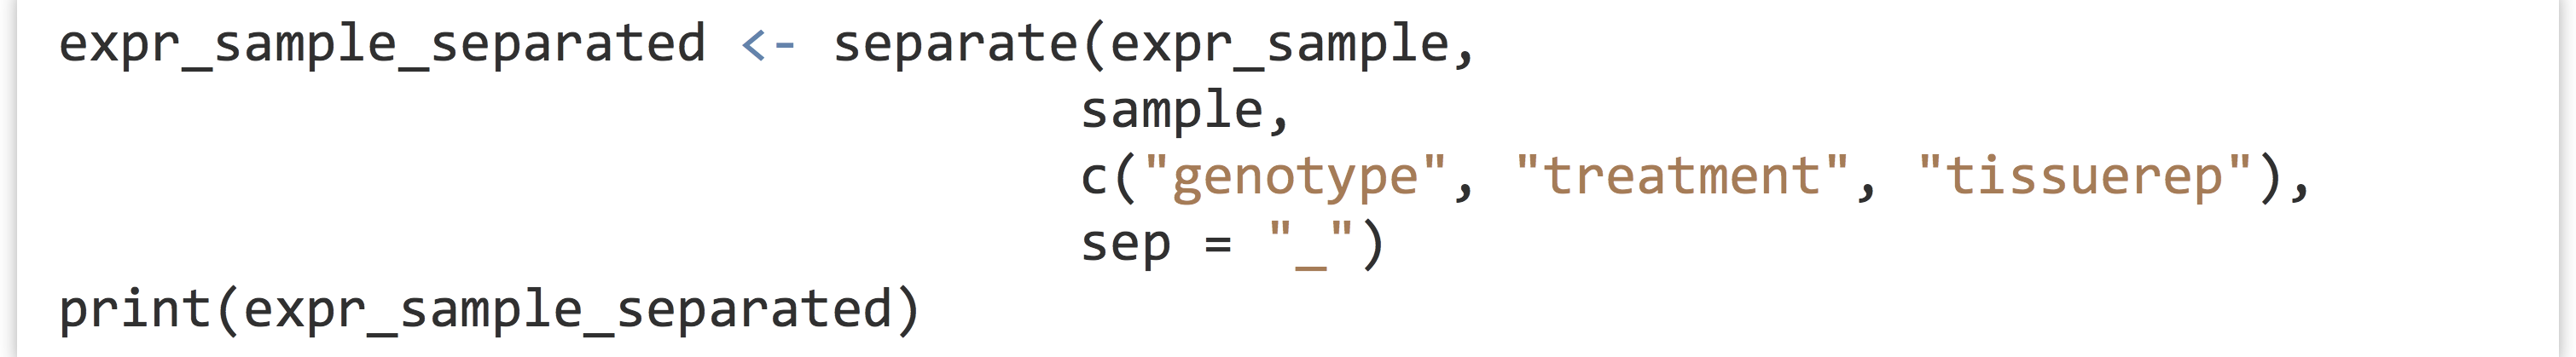 III.9_10_r_209_expr_sample_separate